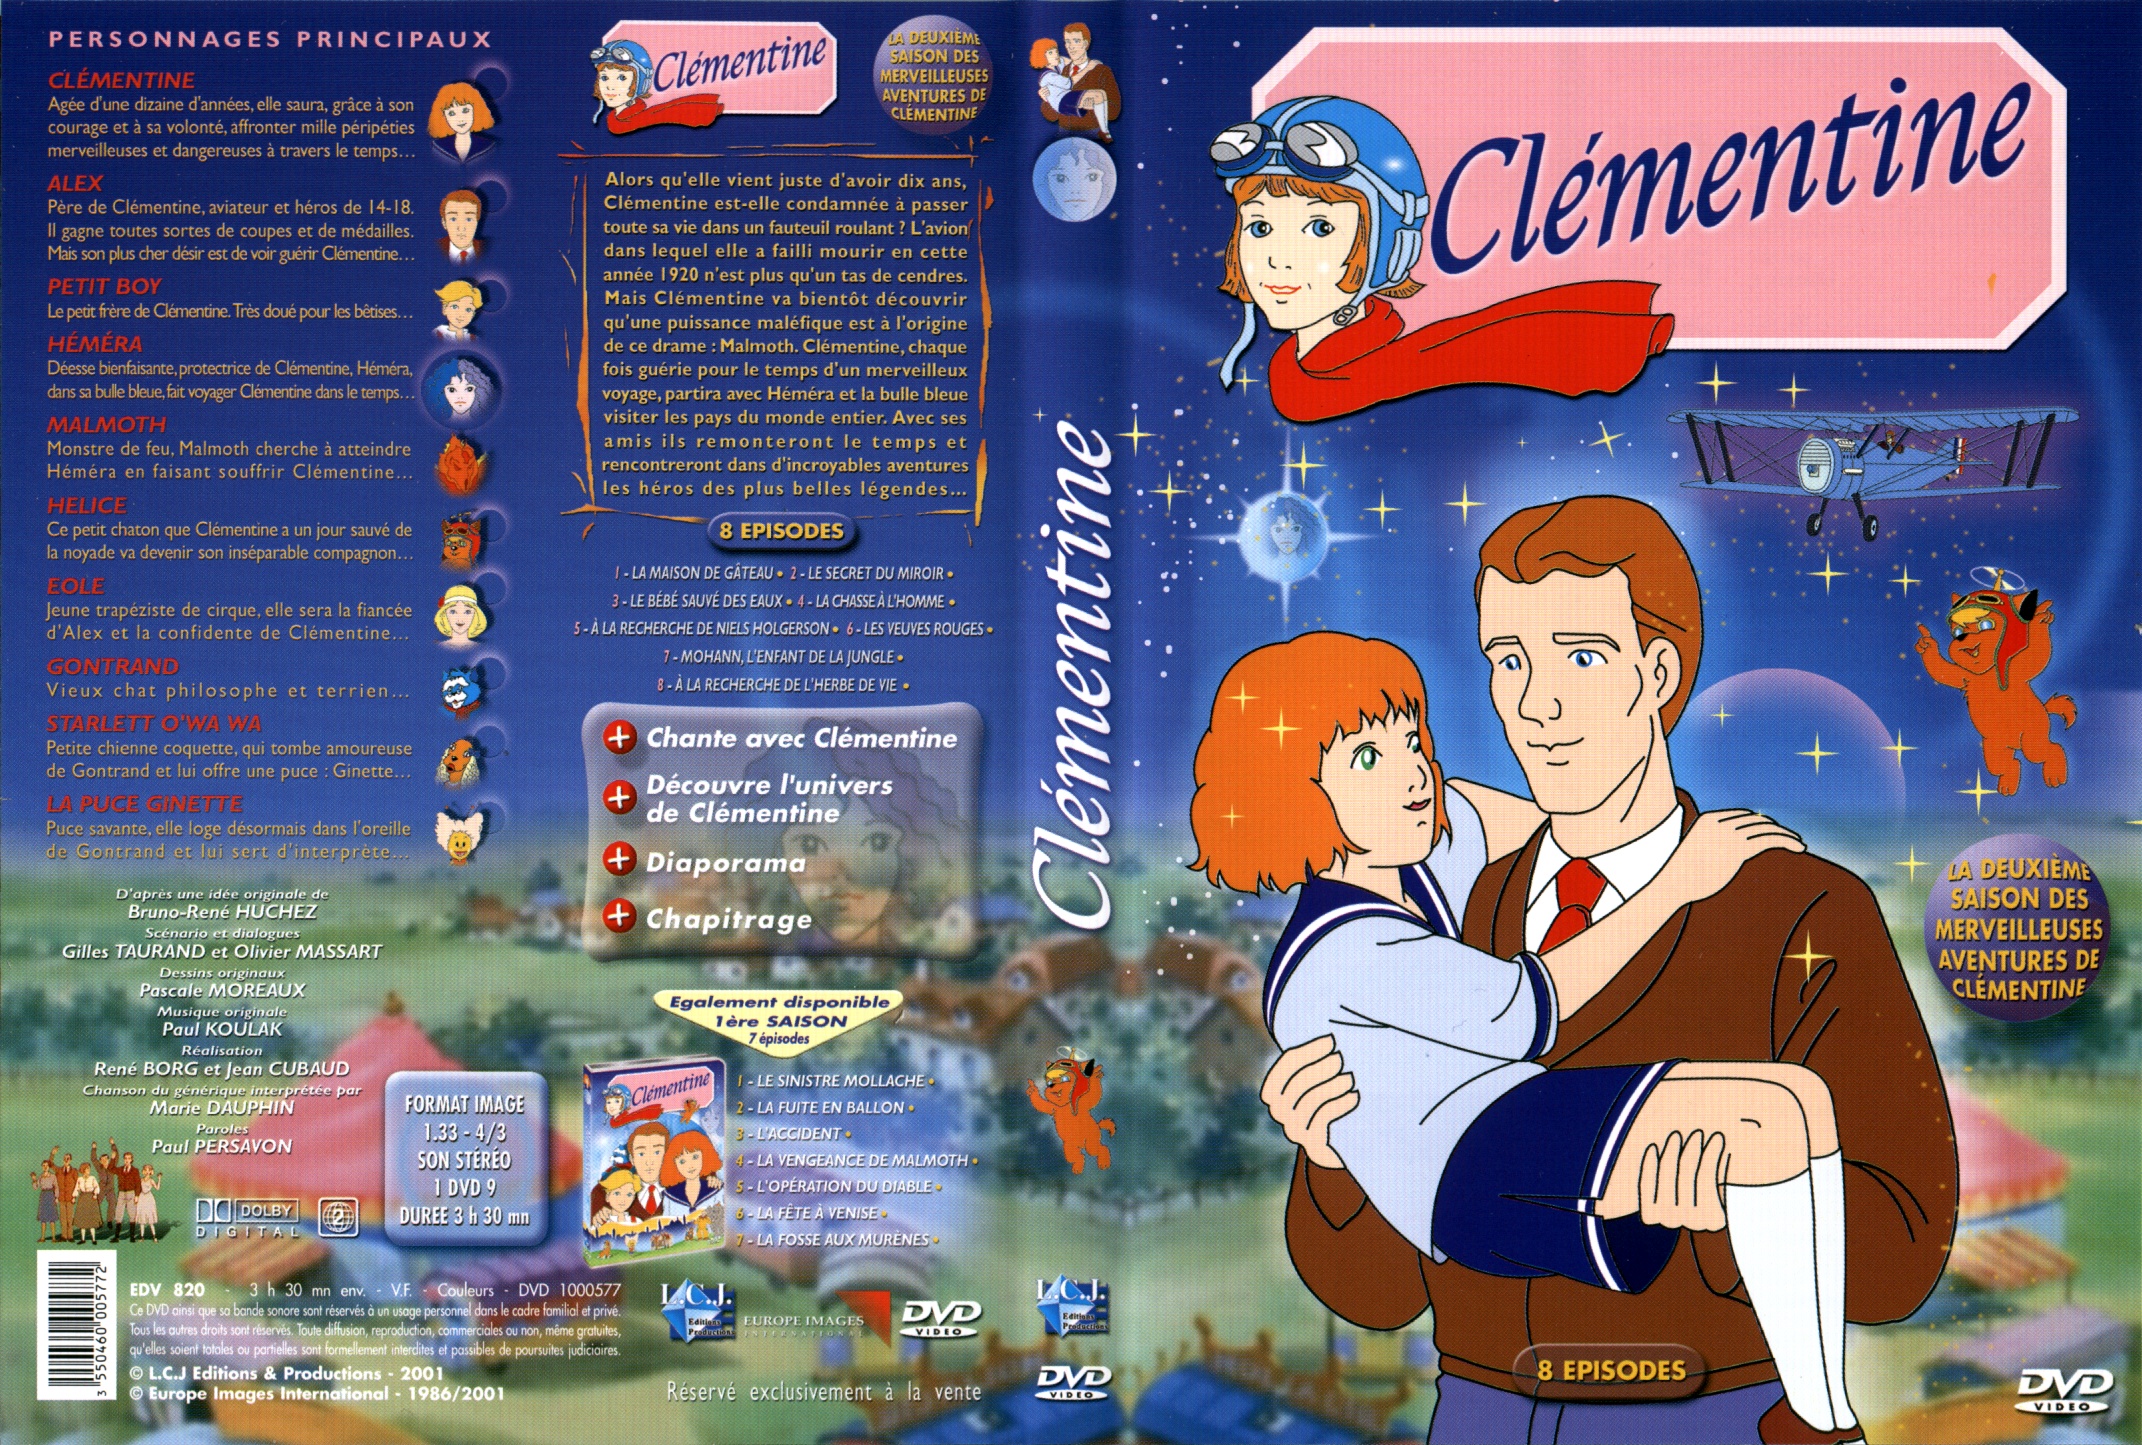 Jaquette DVD Clmentine vol 2